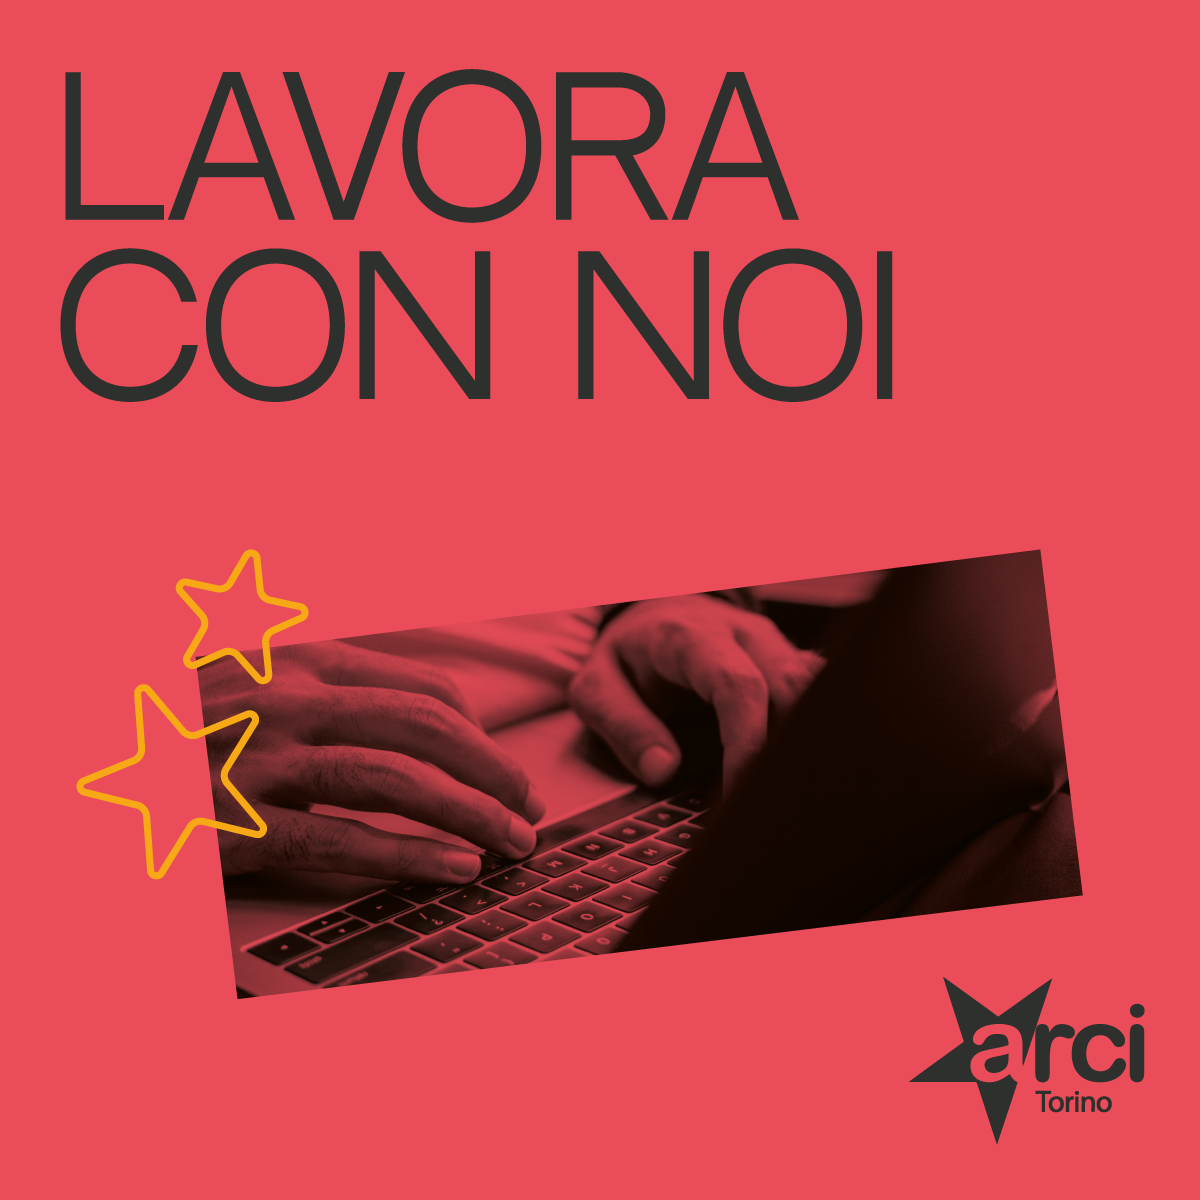 Arci Torino aps è alla ricerca di un/una direttore/direttrice amministrativo/a.